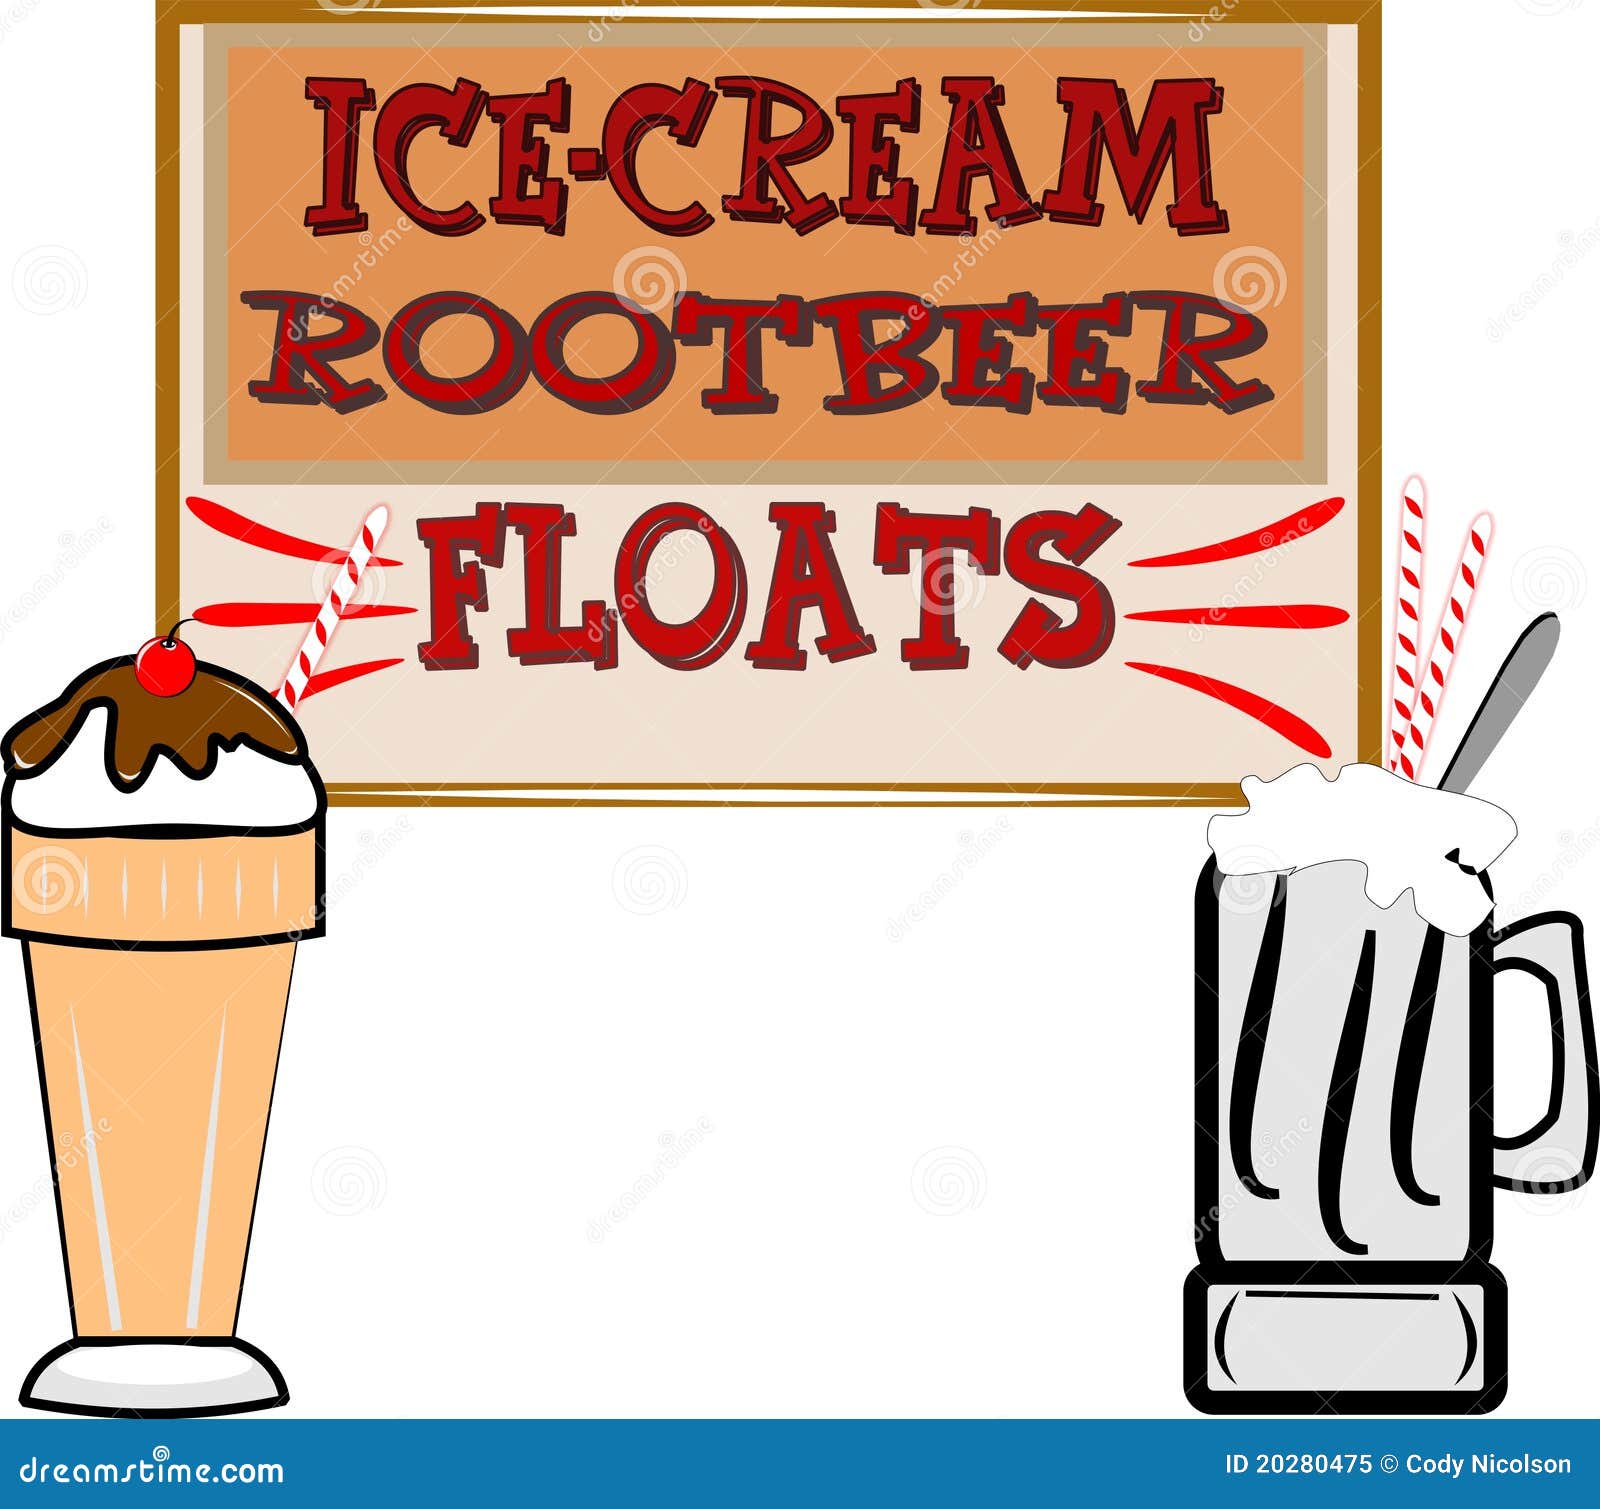 root beer float clip art free - photo #43